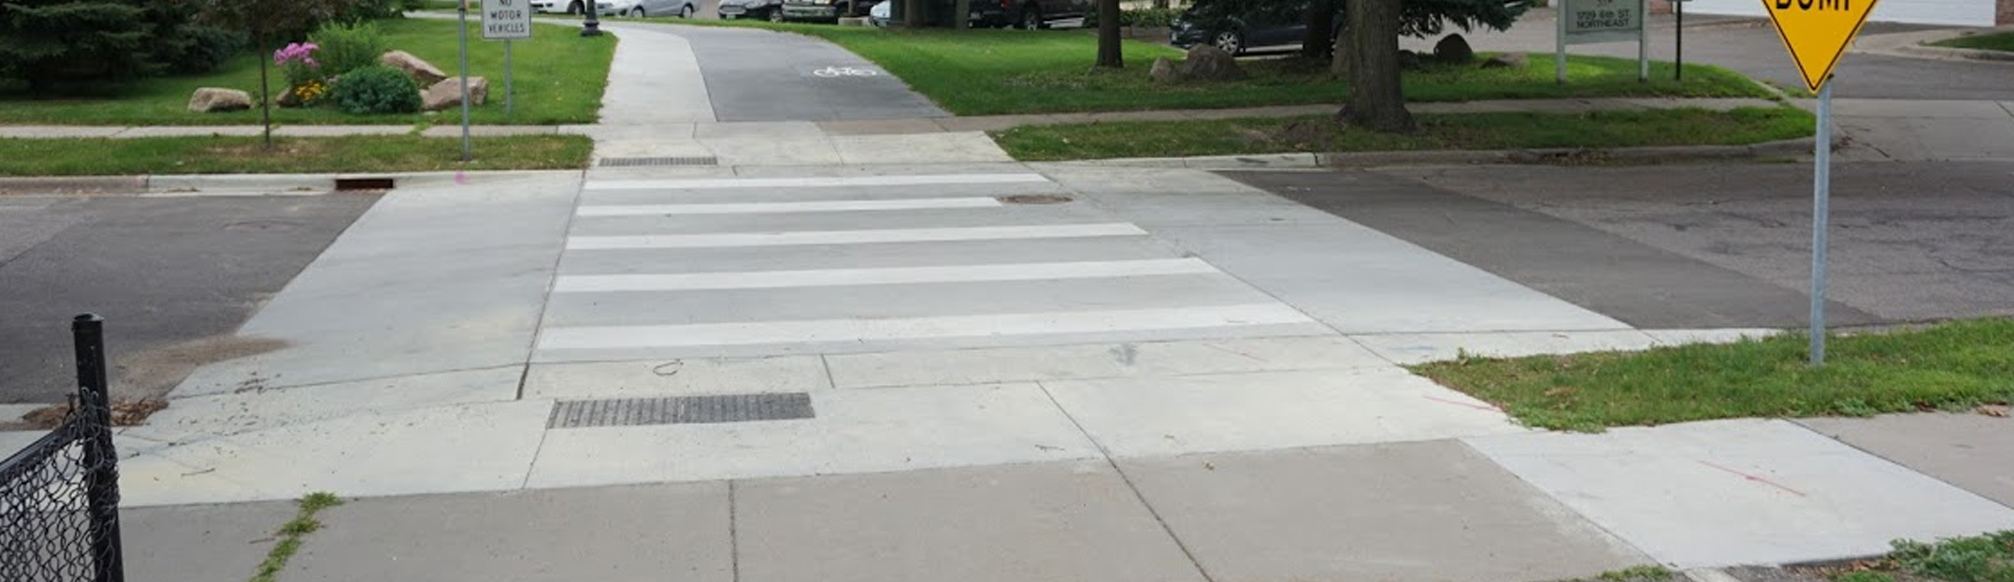 Raised pedestrian crossing